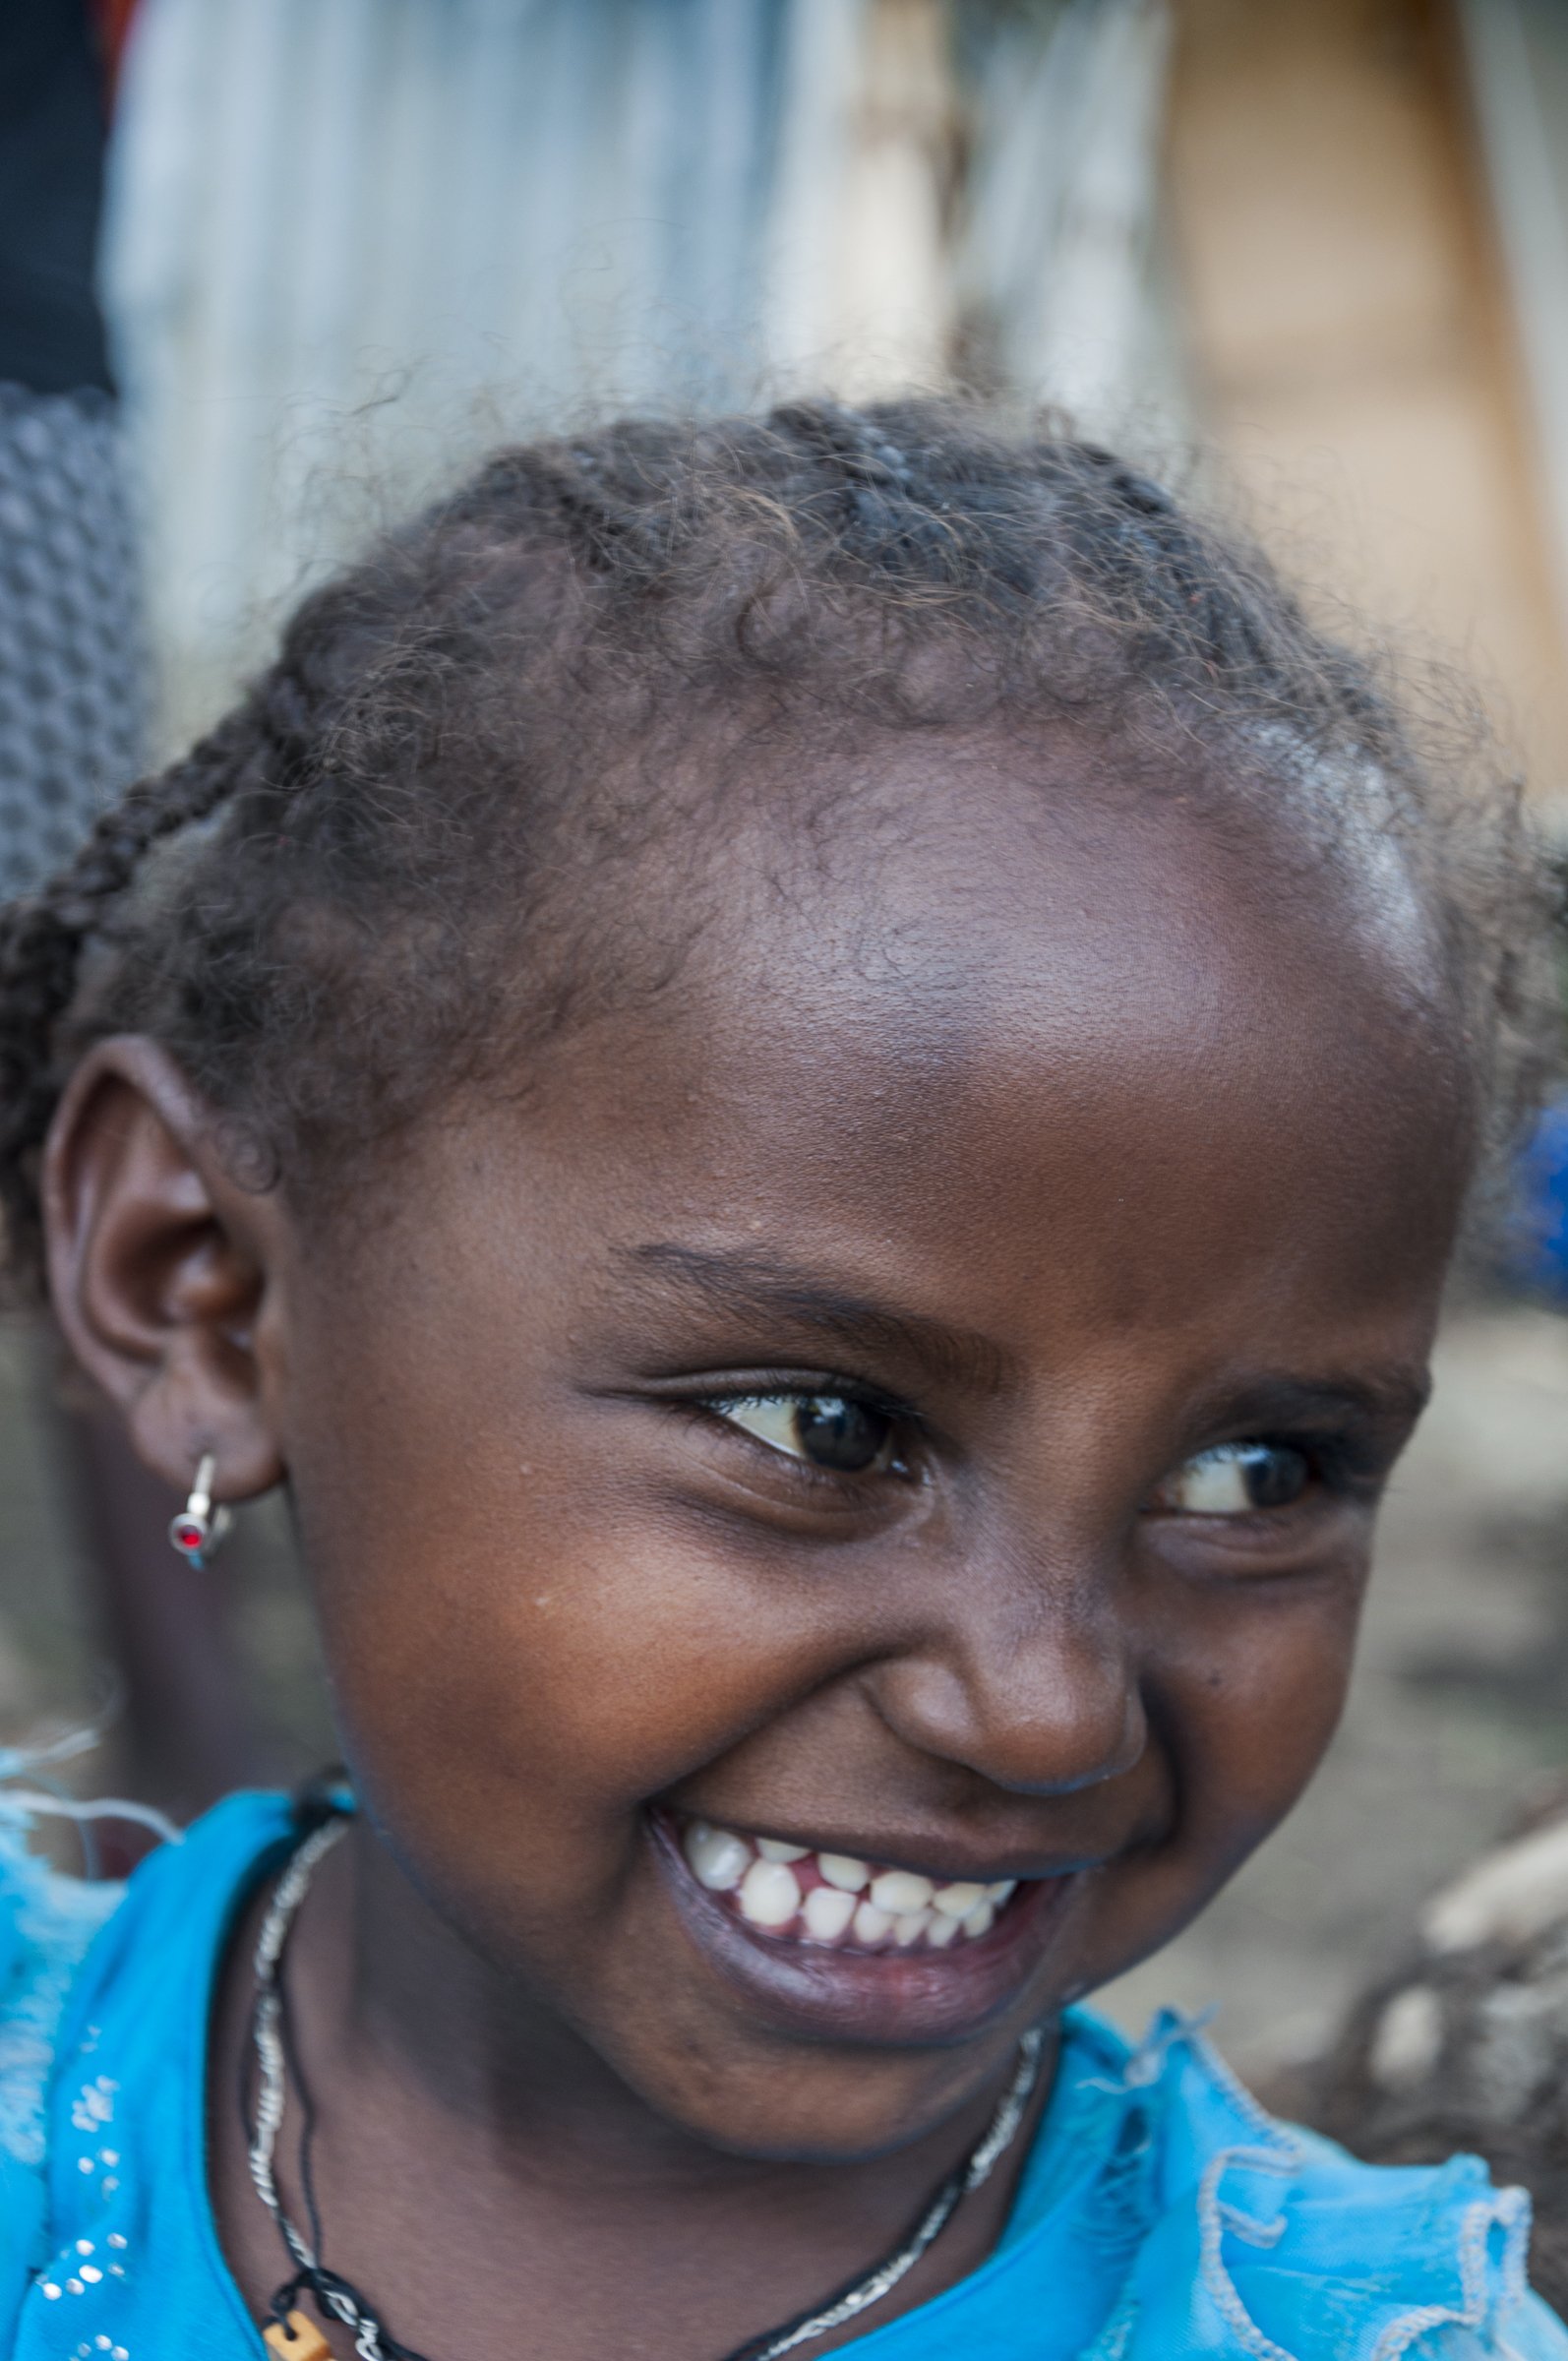 The smile of an Ethiopian girl